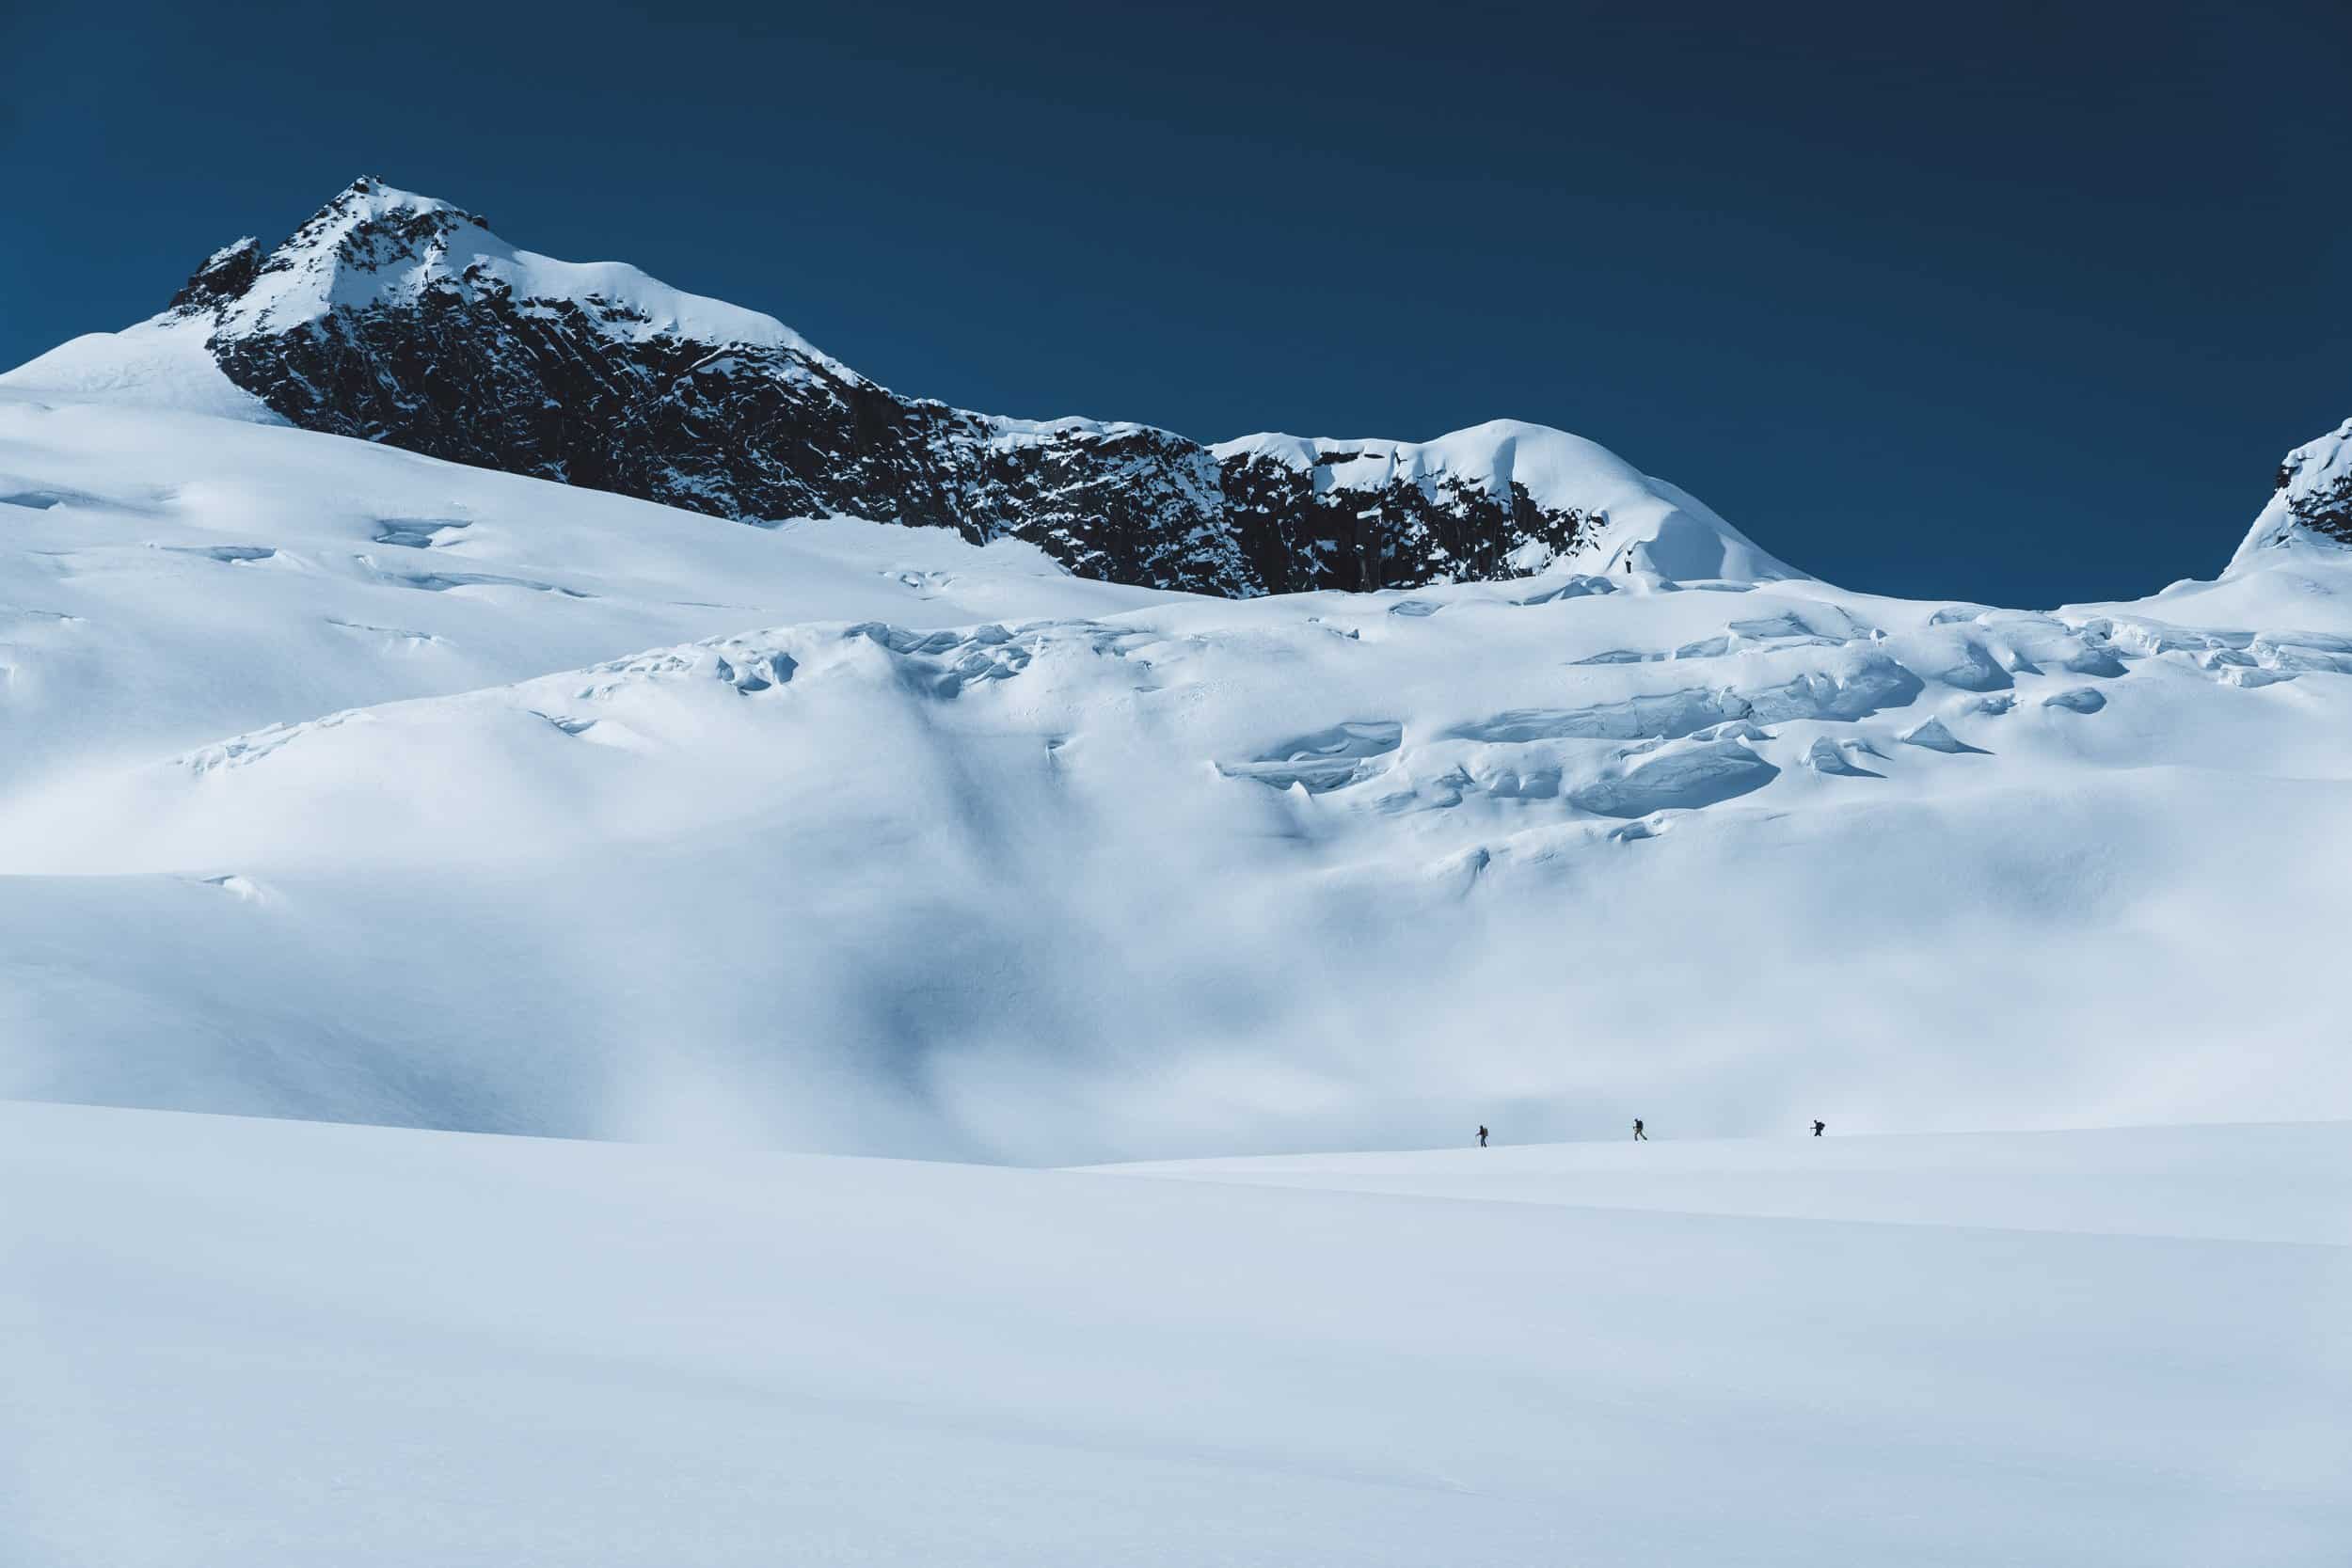 Three skiiers in the far distance of a snowy mountain scene.